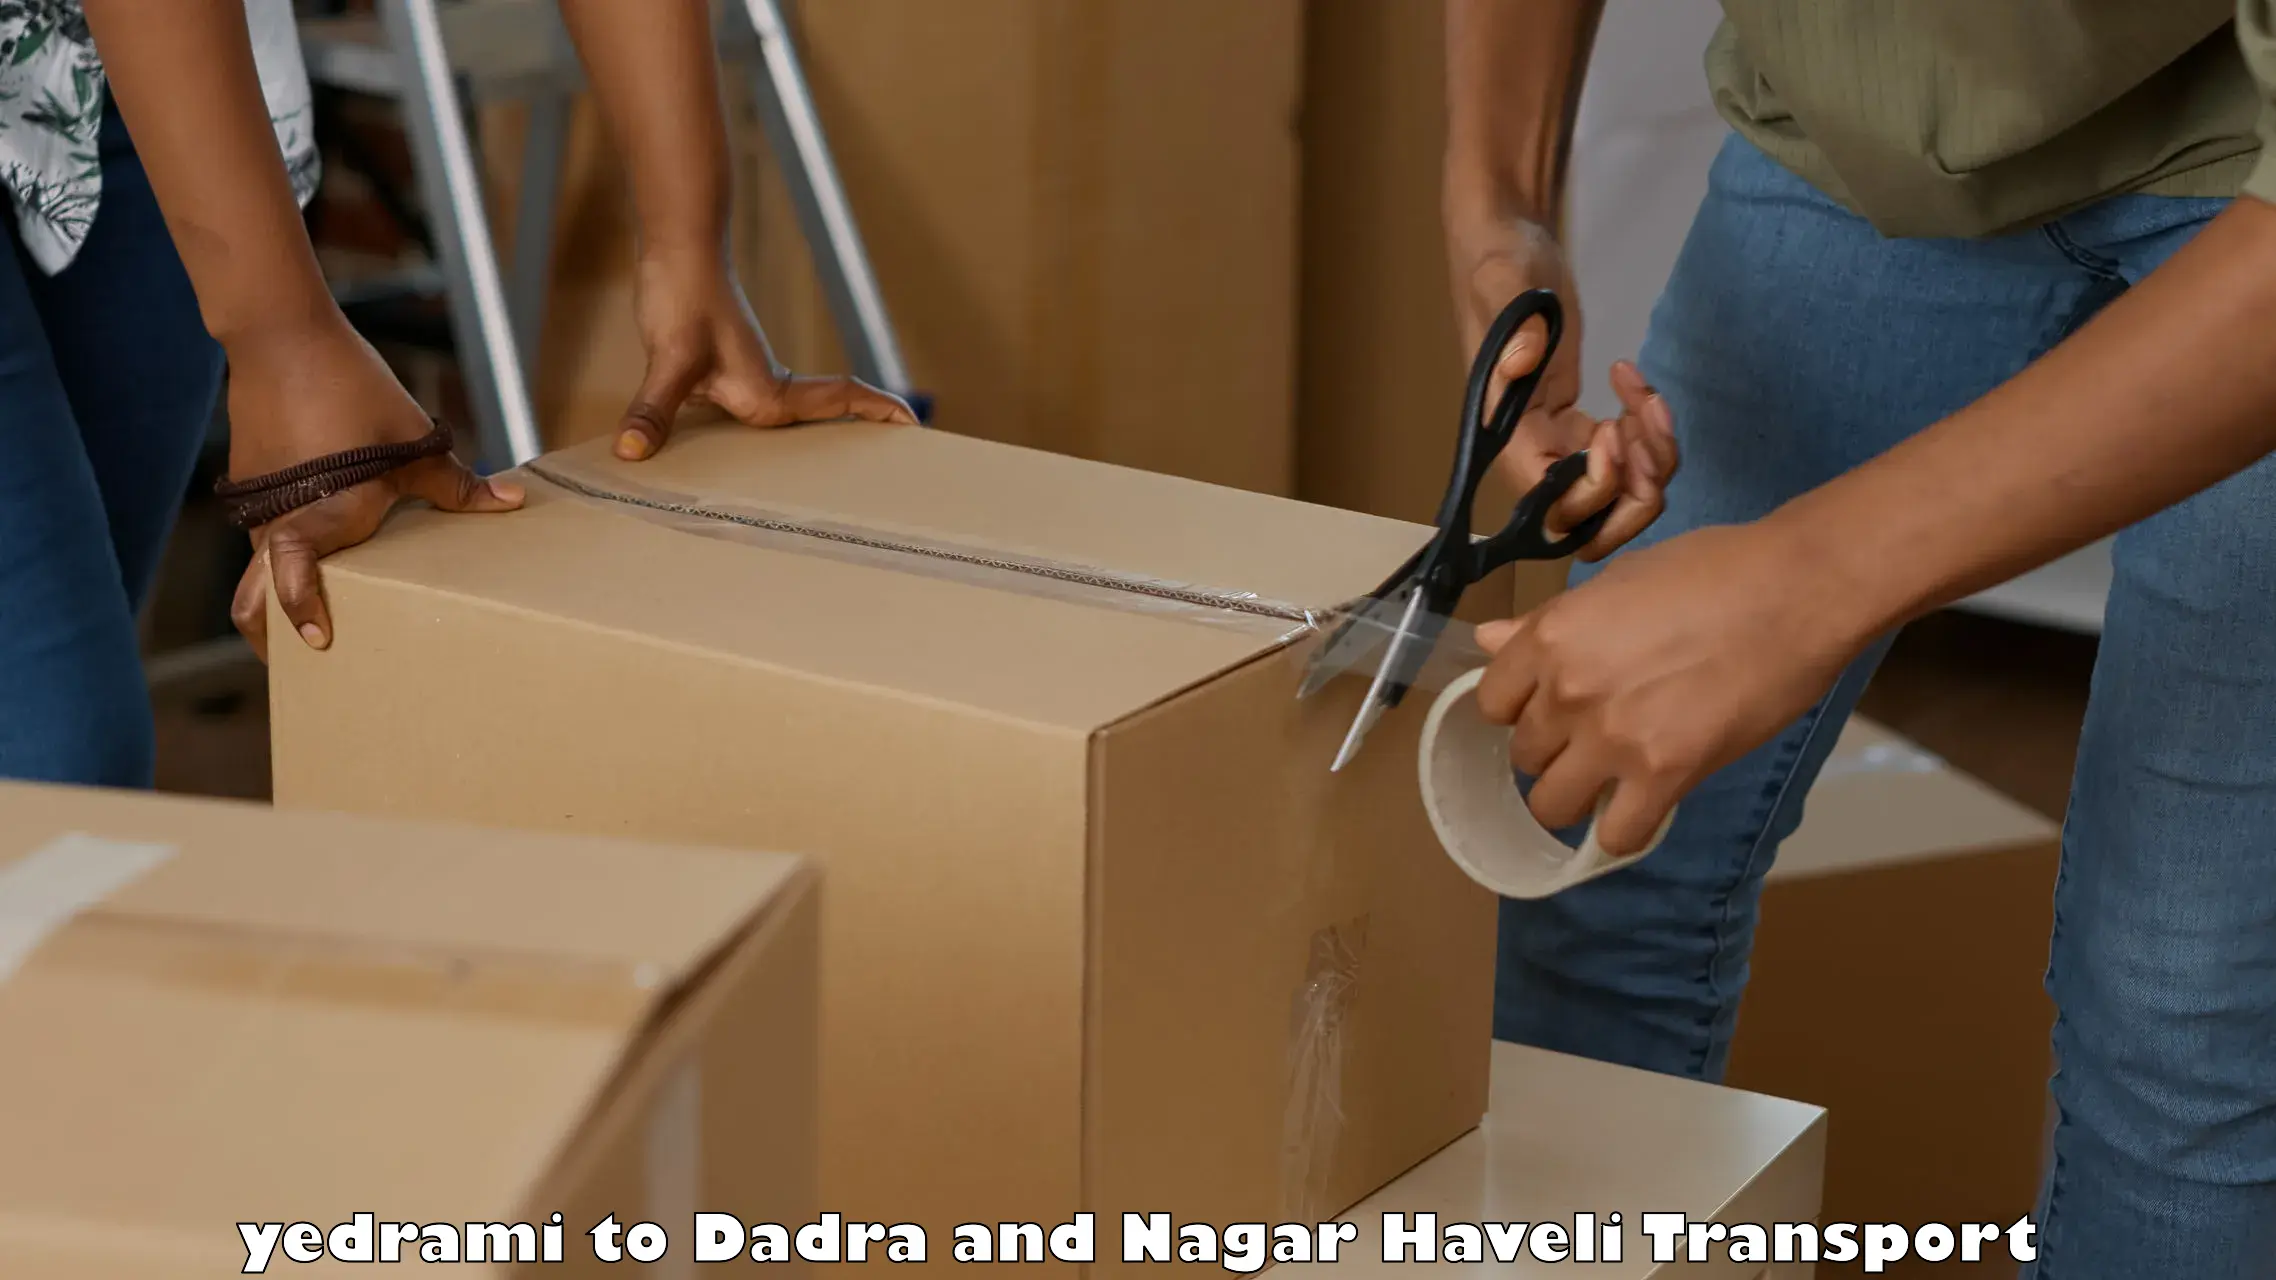 Furniture transport service yedrami to Dadra and Nagar Haveli